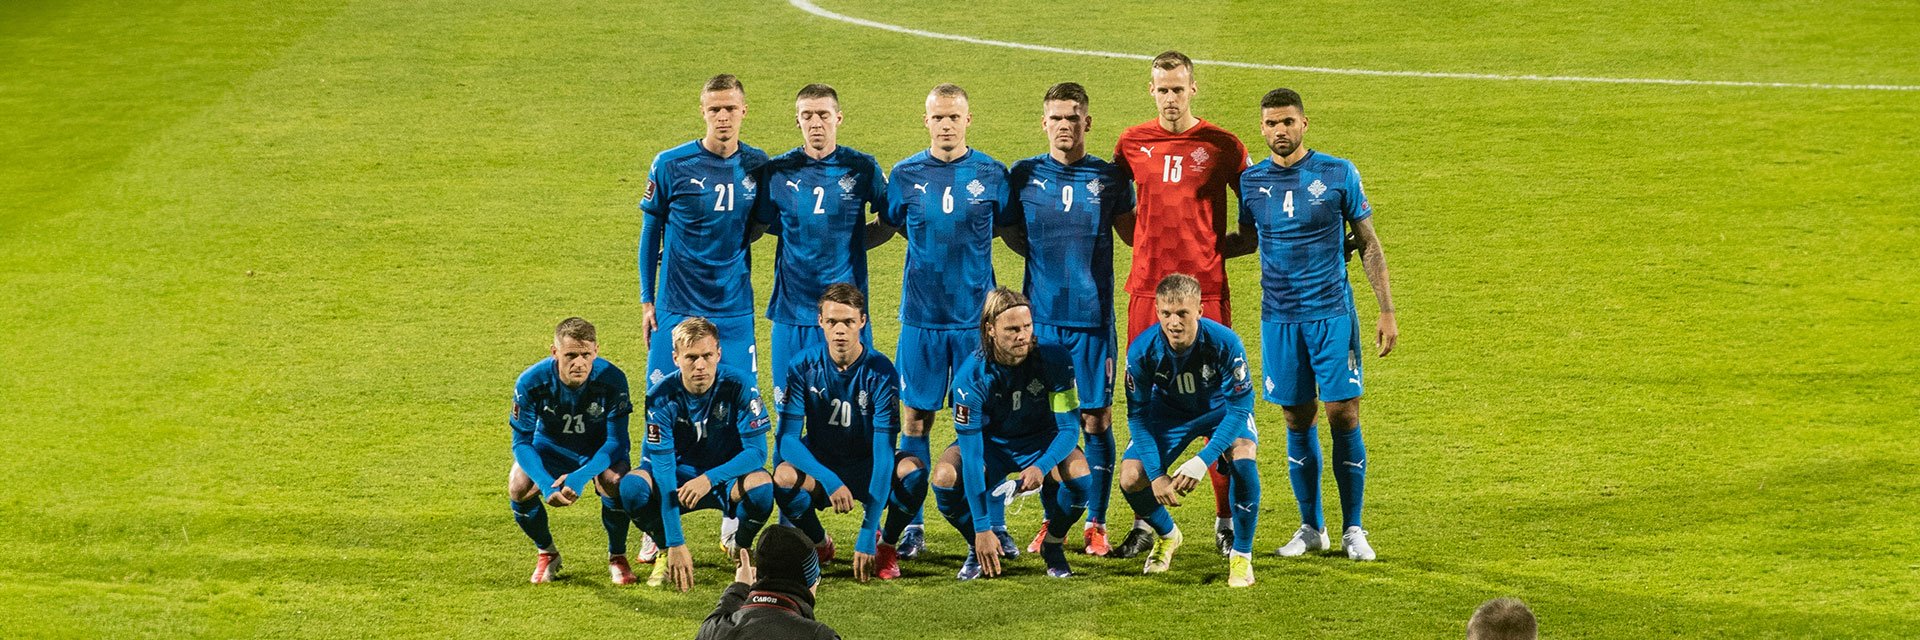 2021_Futbol_Iceland_03.jpg